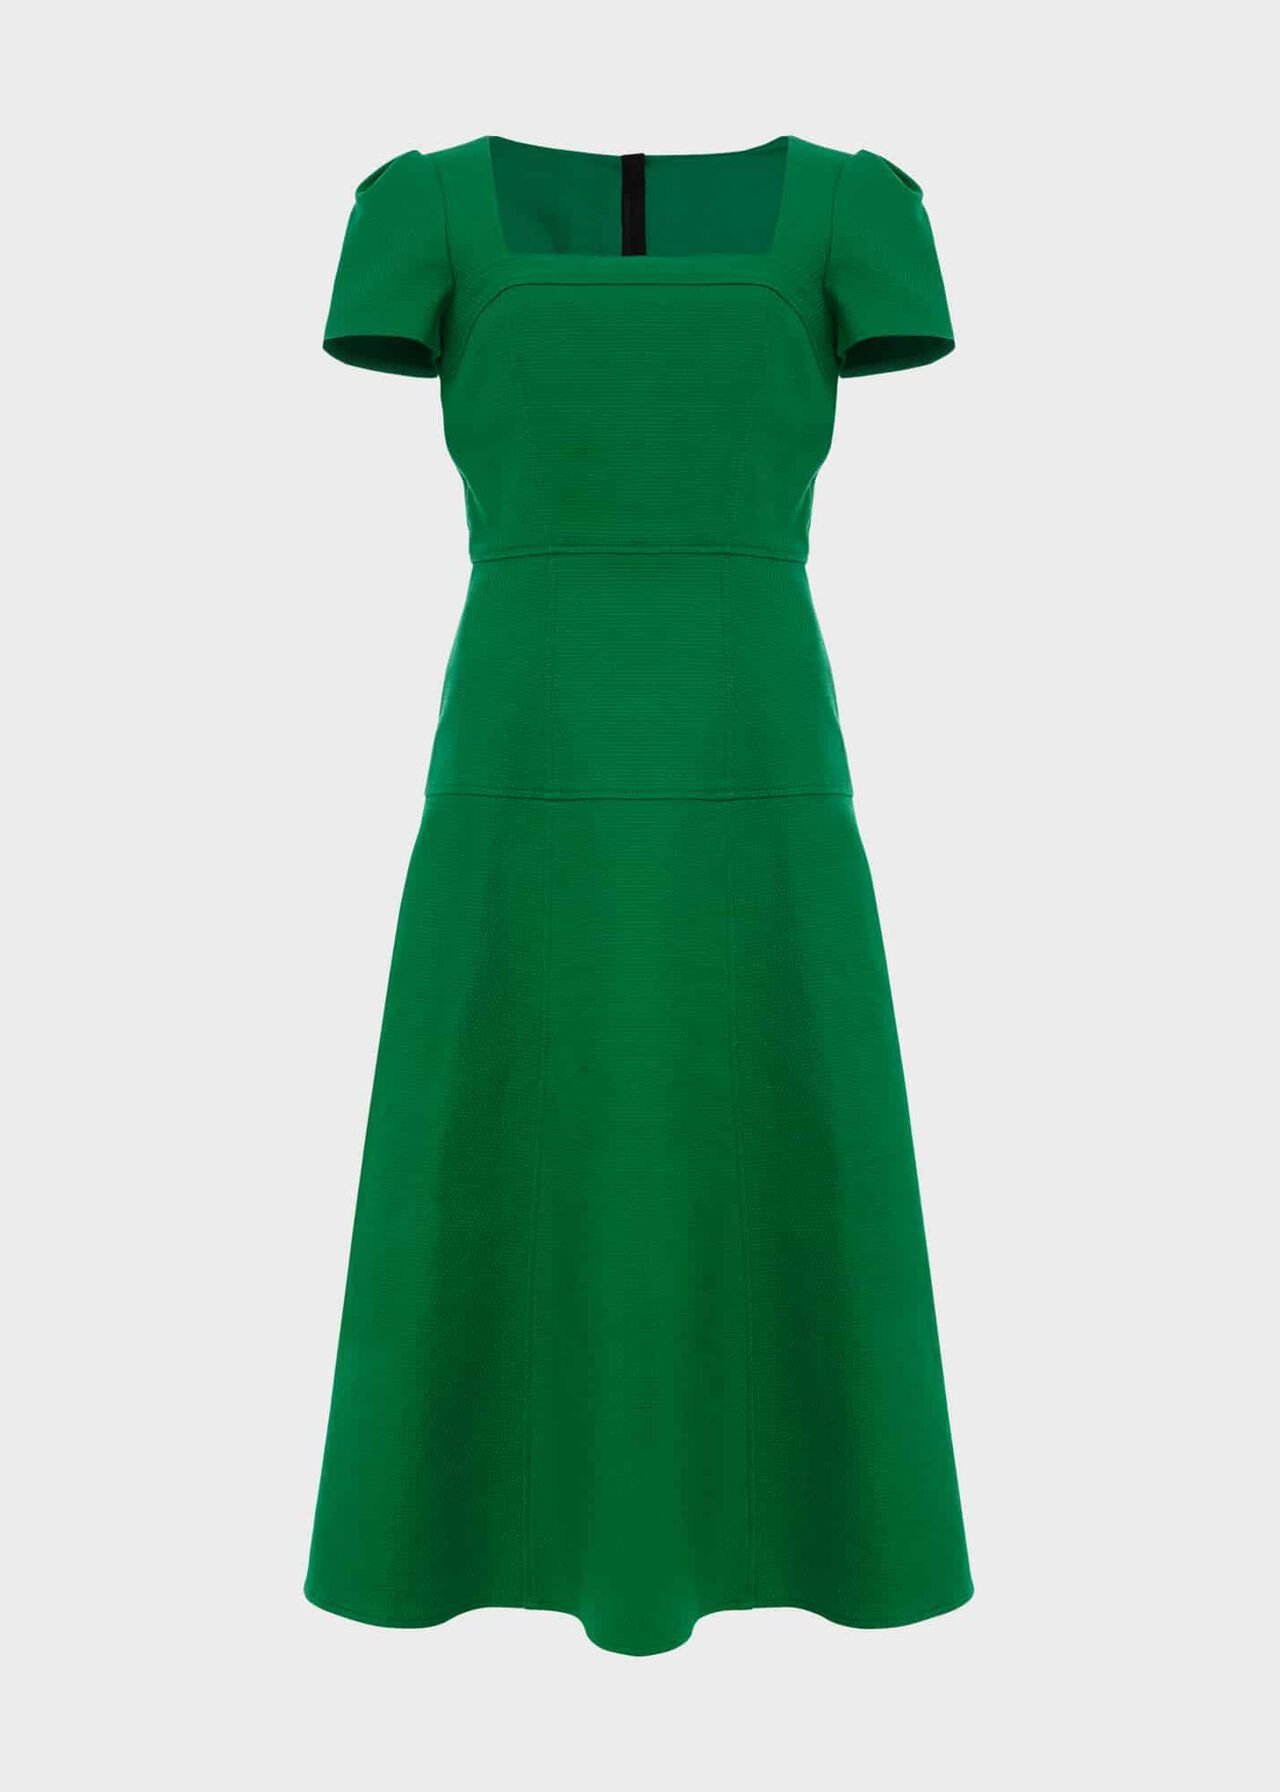 Chatsworth Dress, Green, hi-res